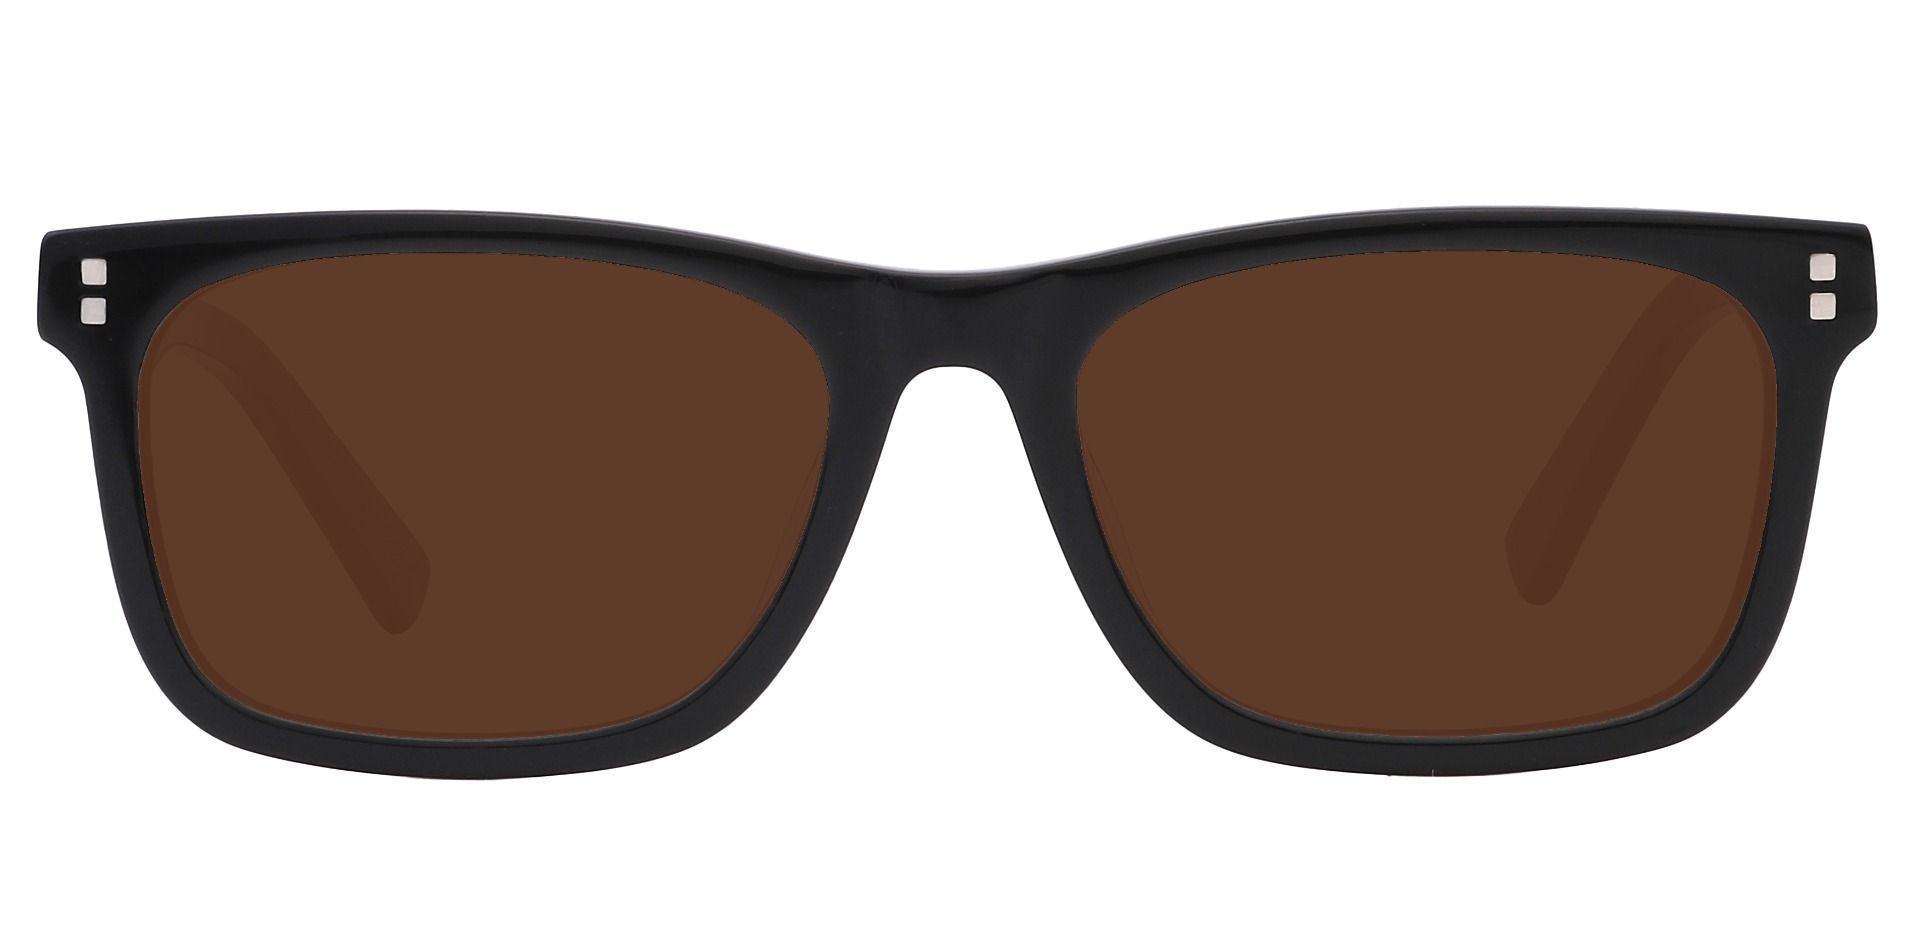 Liberty Rectangle Progressive Sunglasses - Black Frame With Brown Lenses